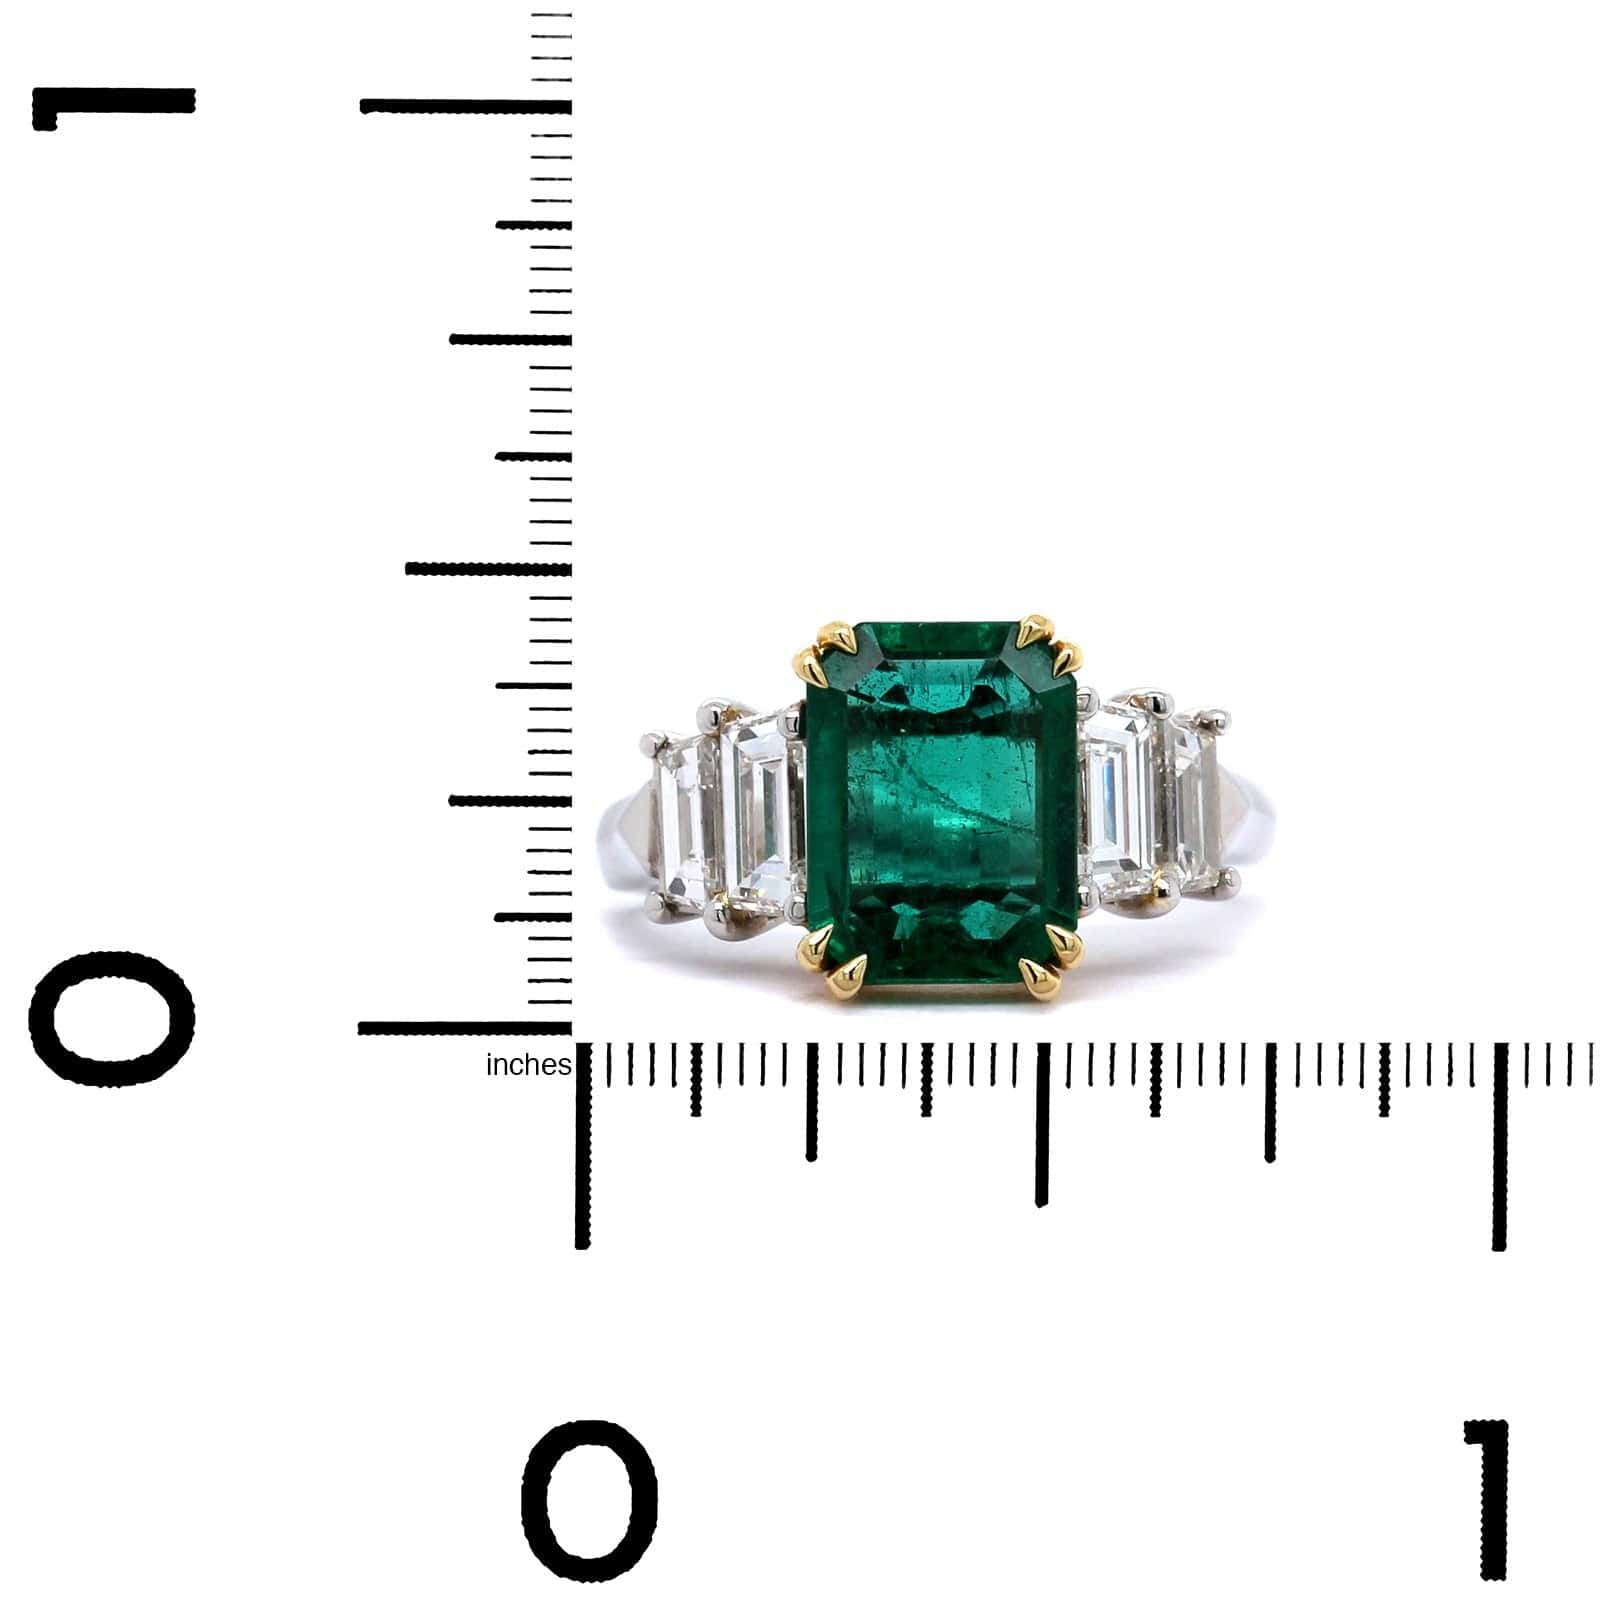 Platinum Emerald Cut Emerald and Diamond Ring